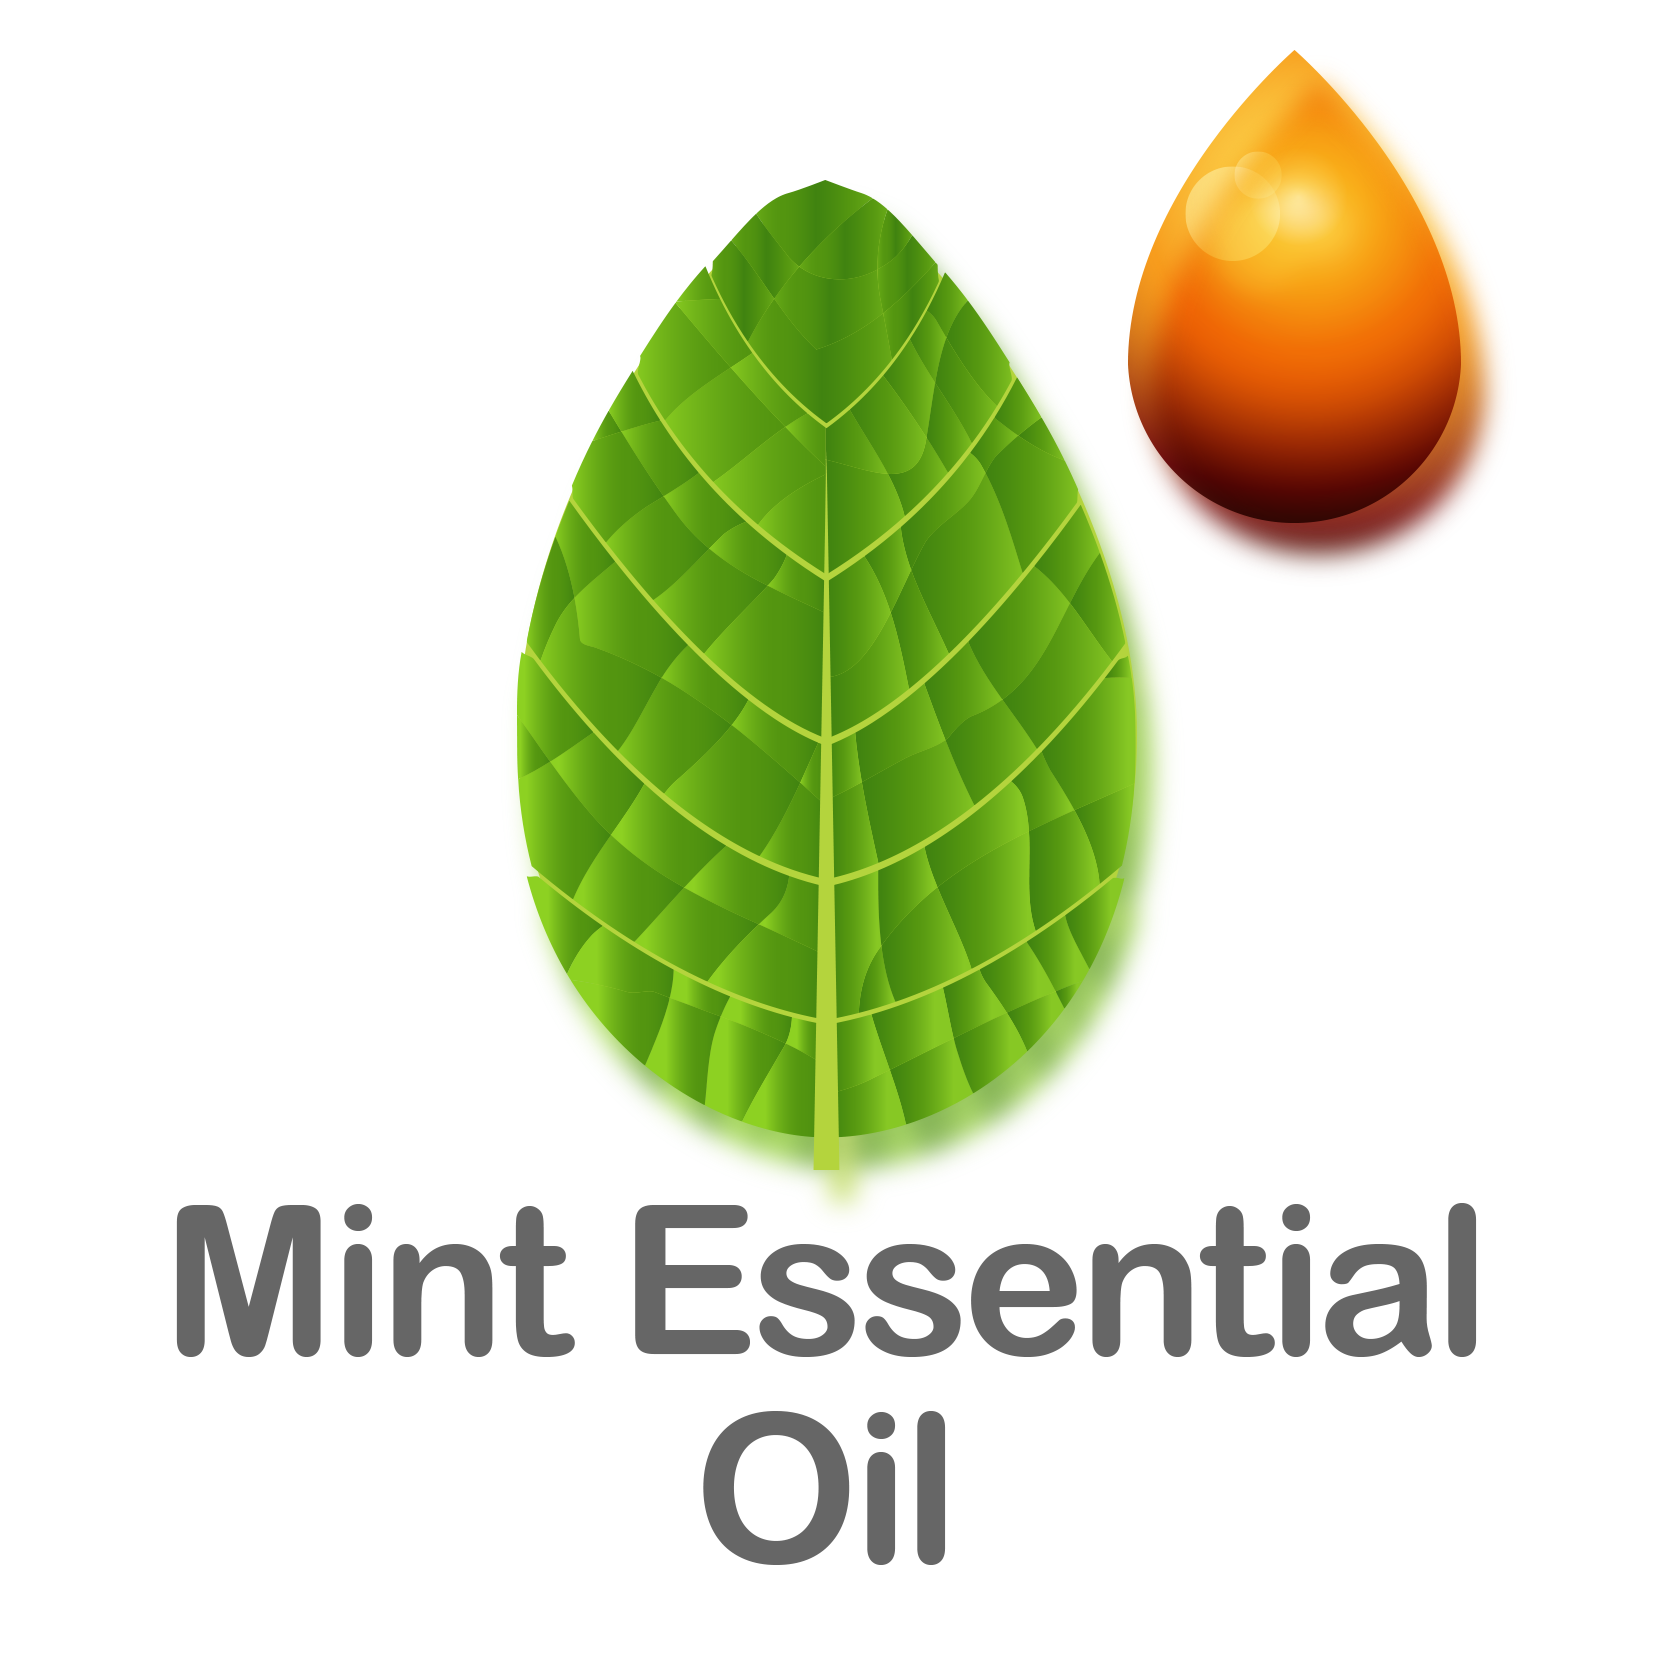 Mind Essential Oil (Copy)